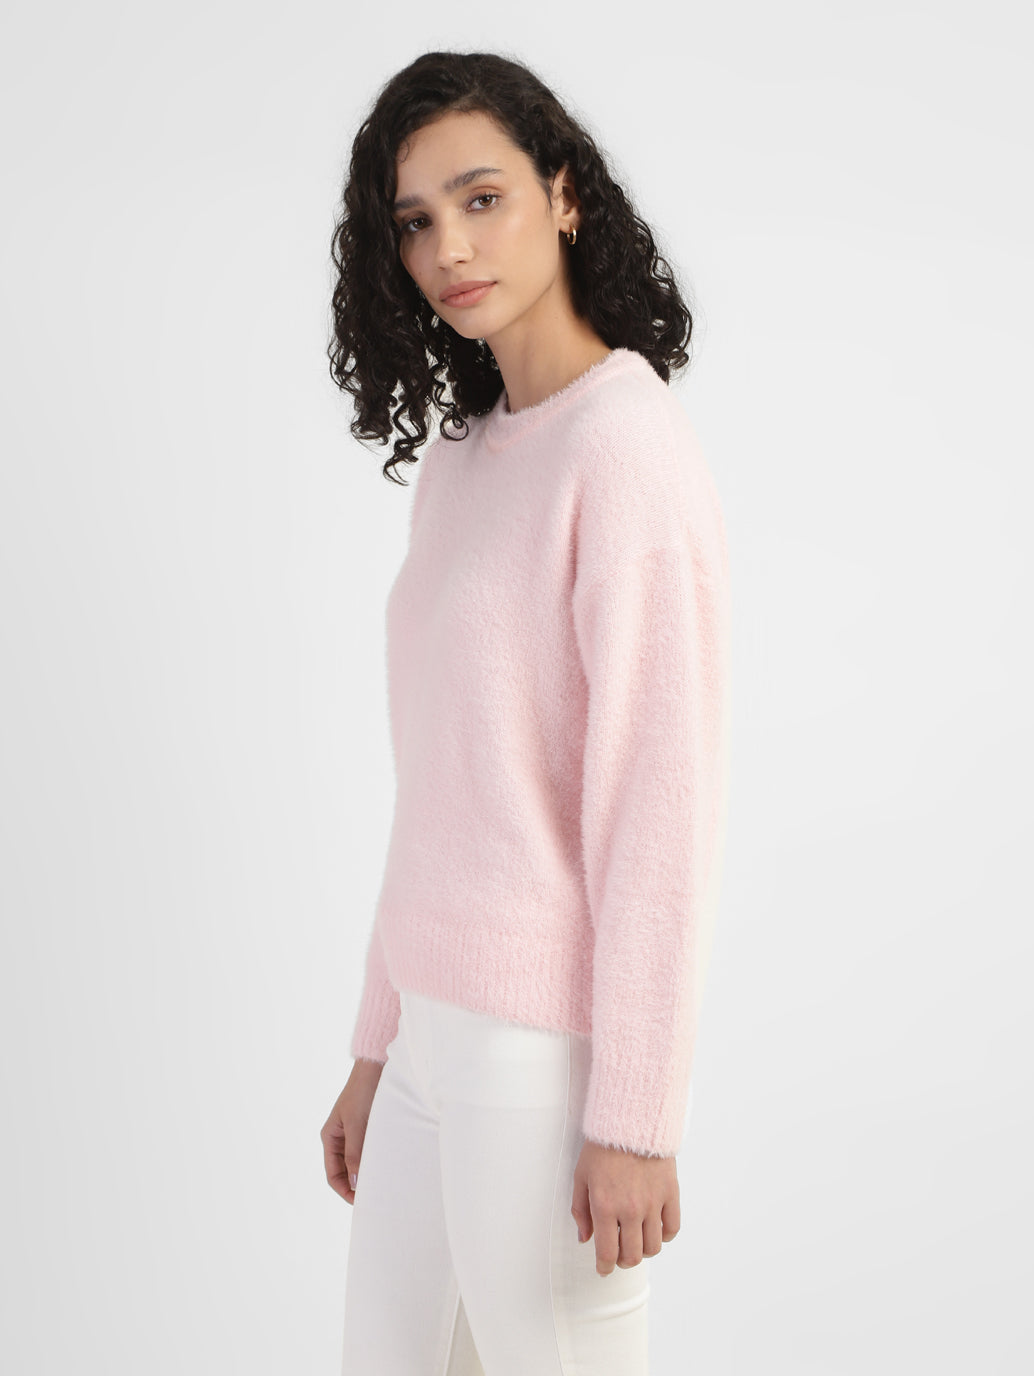 Women's Solid Crew Neck Sweater Pink